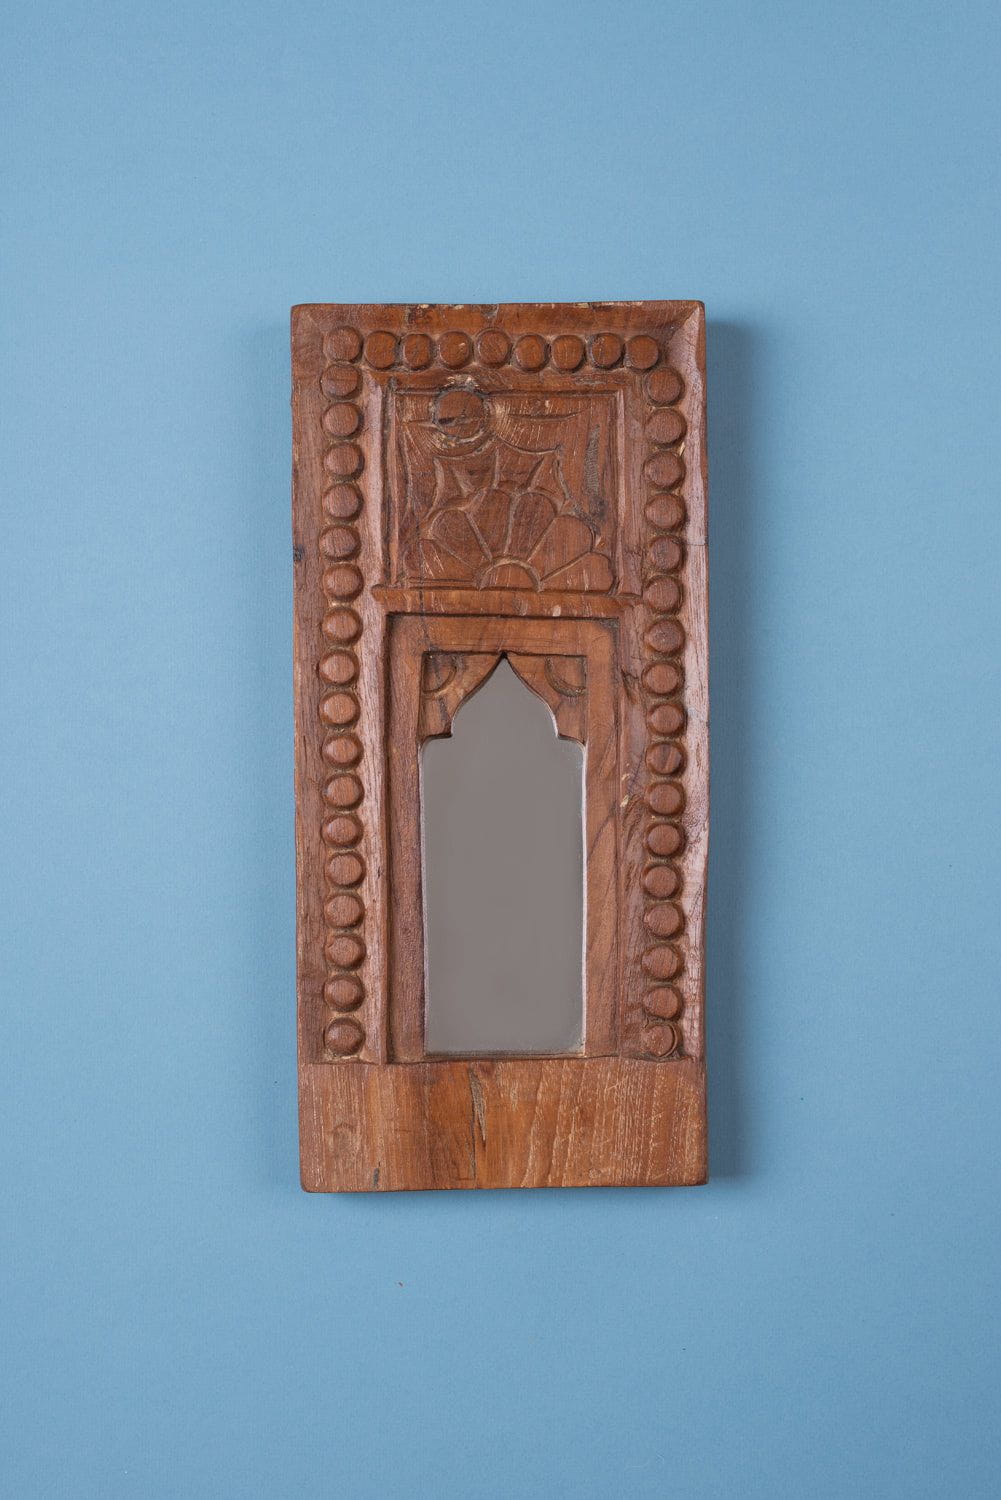 Ian Snow Ltd Vintage Wooden Arch Frame - 19